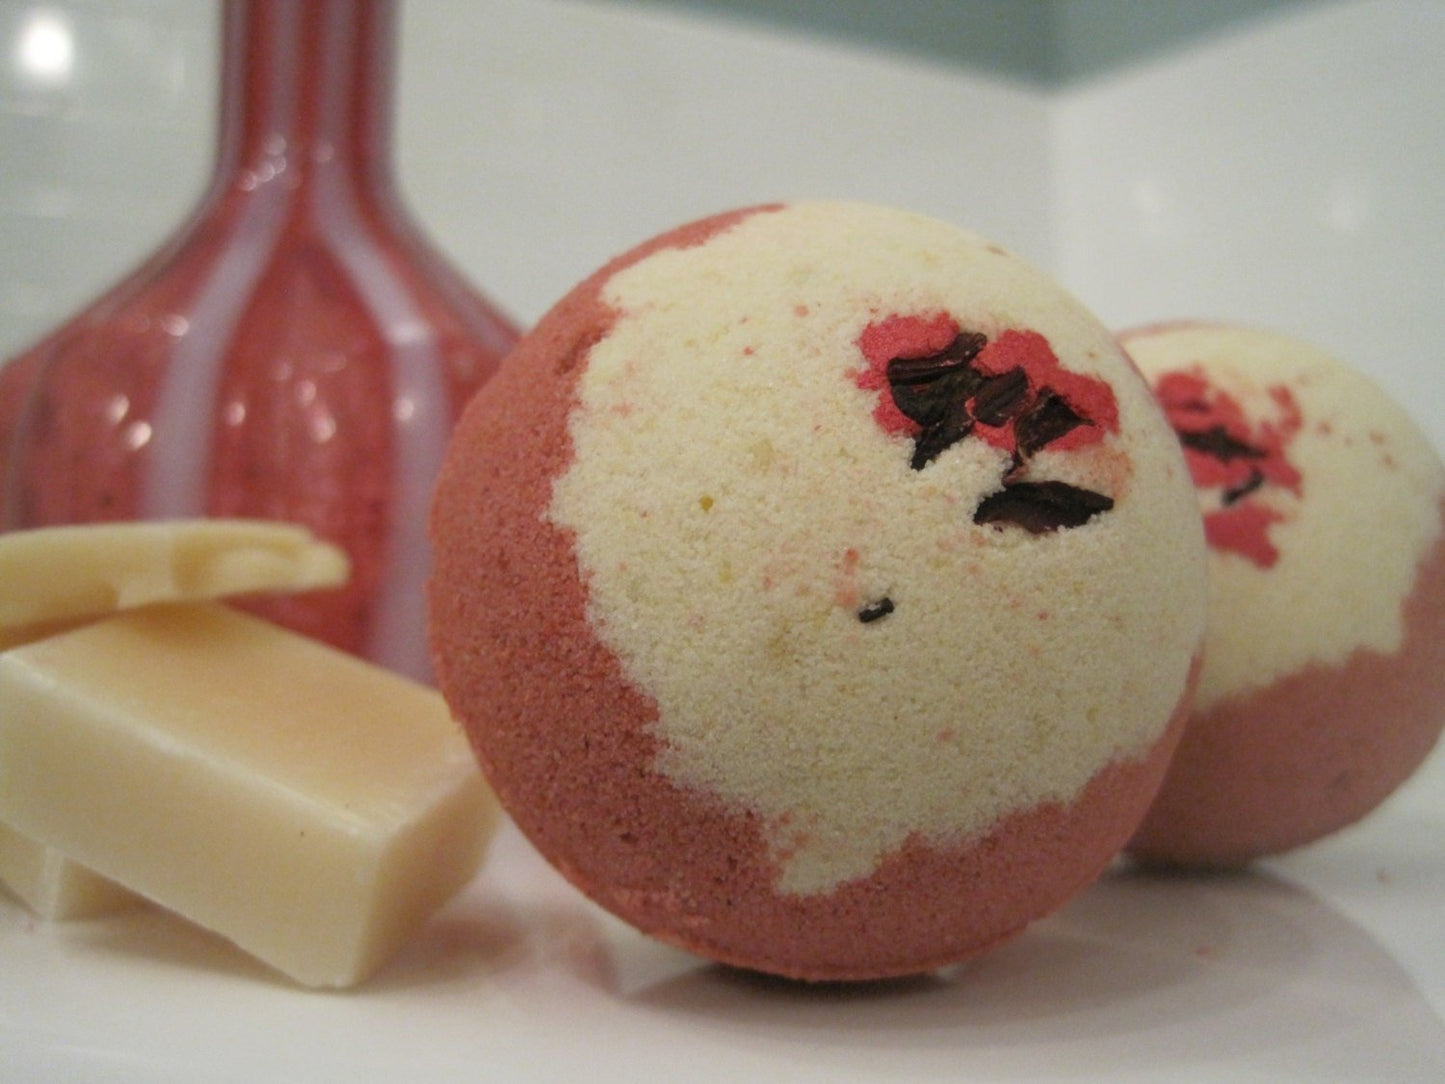 Cherry Almond Scented Bath Bombs with Handmade Soap Inside - 2 ct - Berwyn Betty's Bath & Body Shop